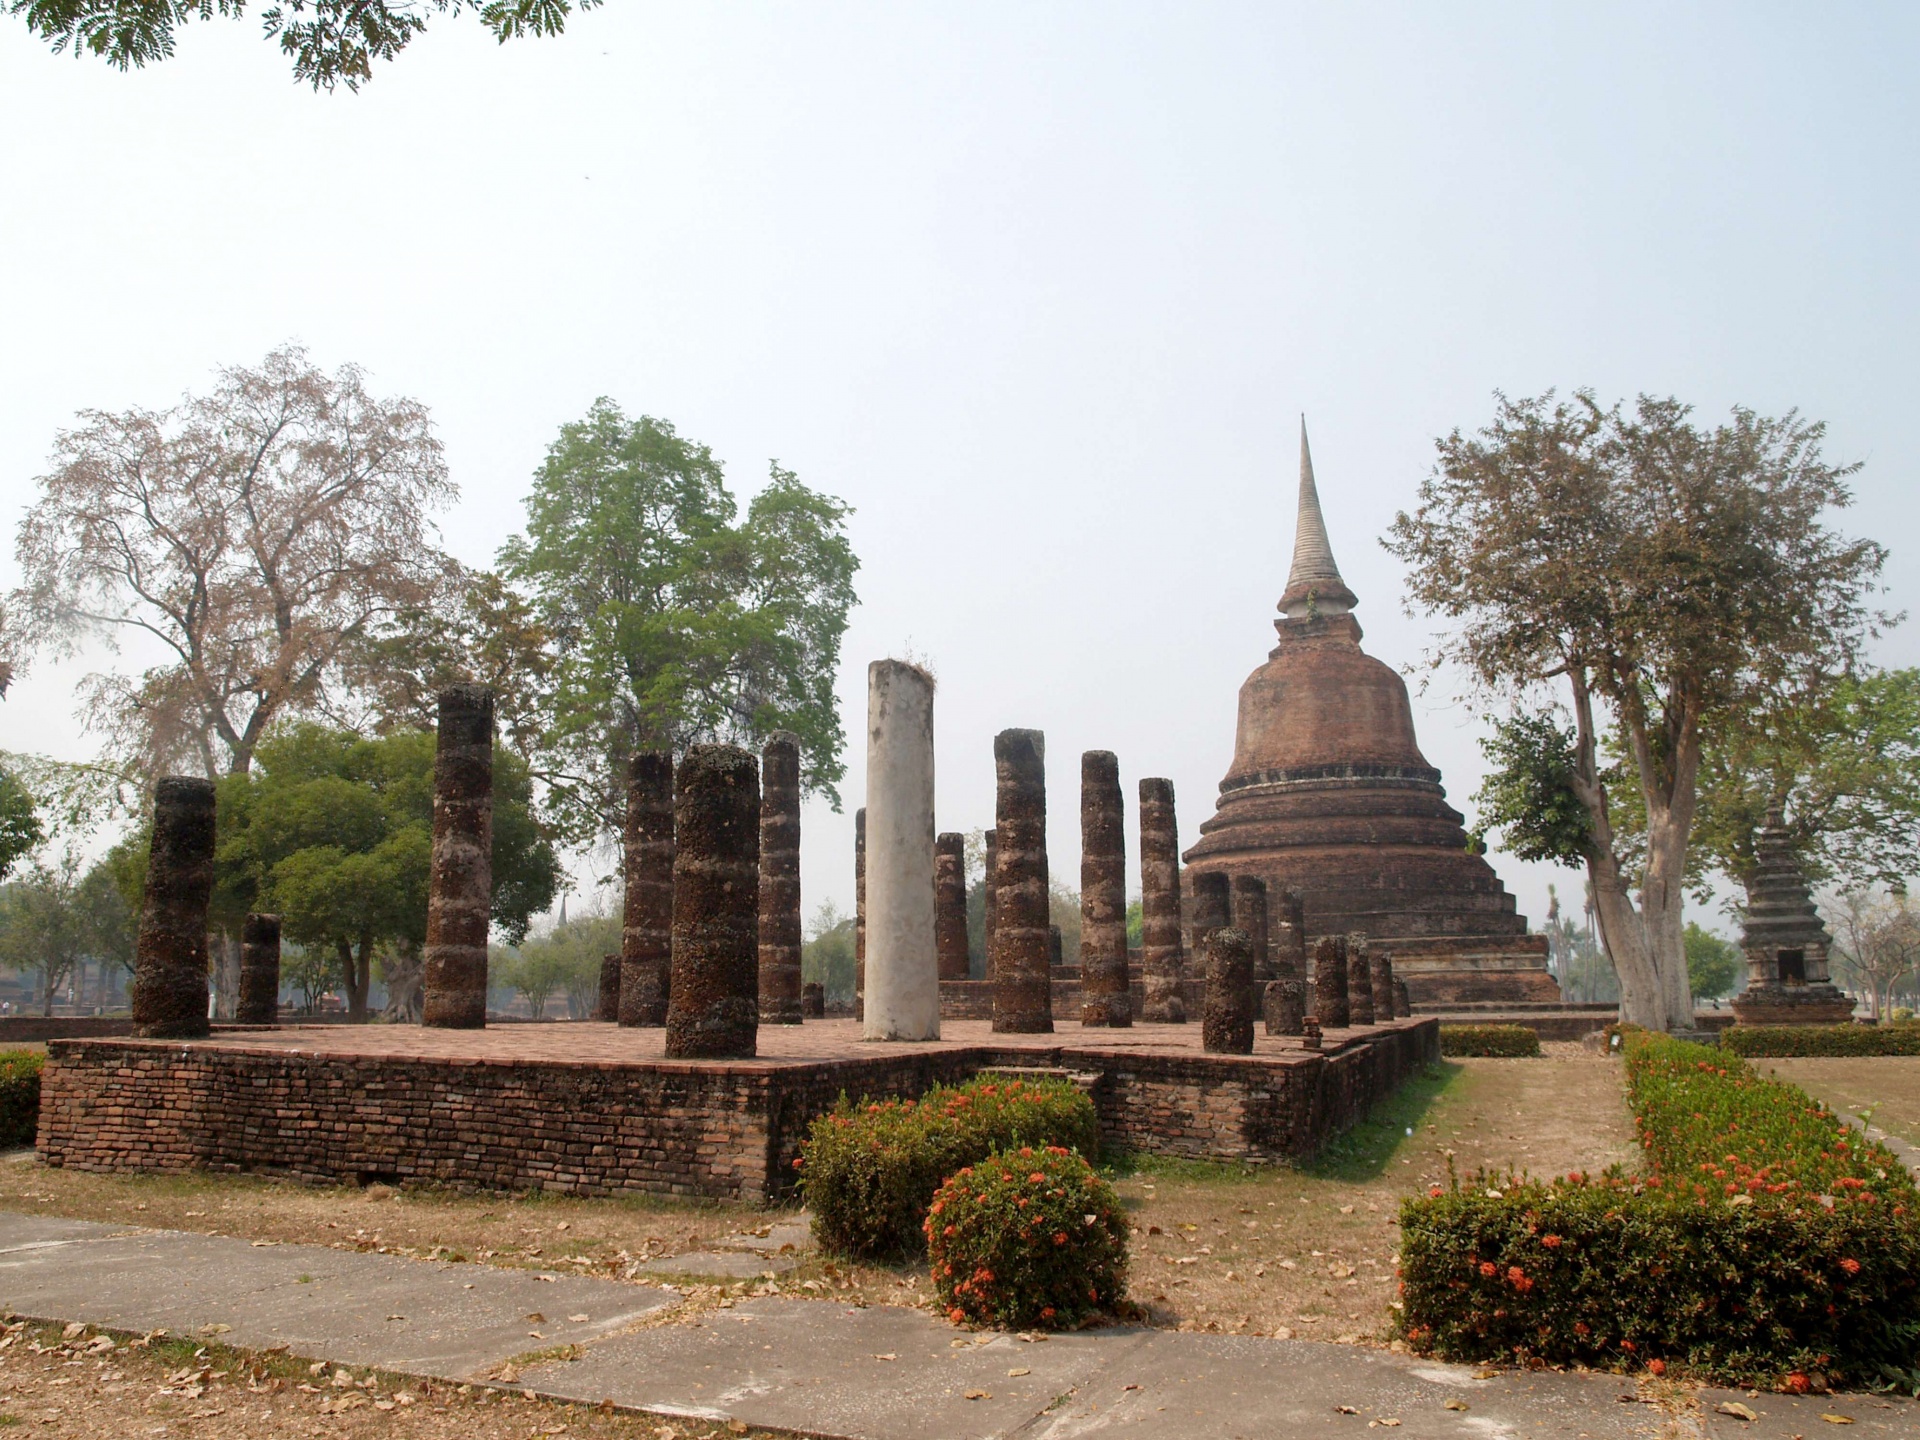 Temple Buddha Statue In Sukhothai